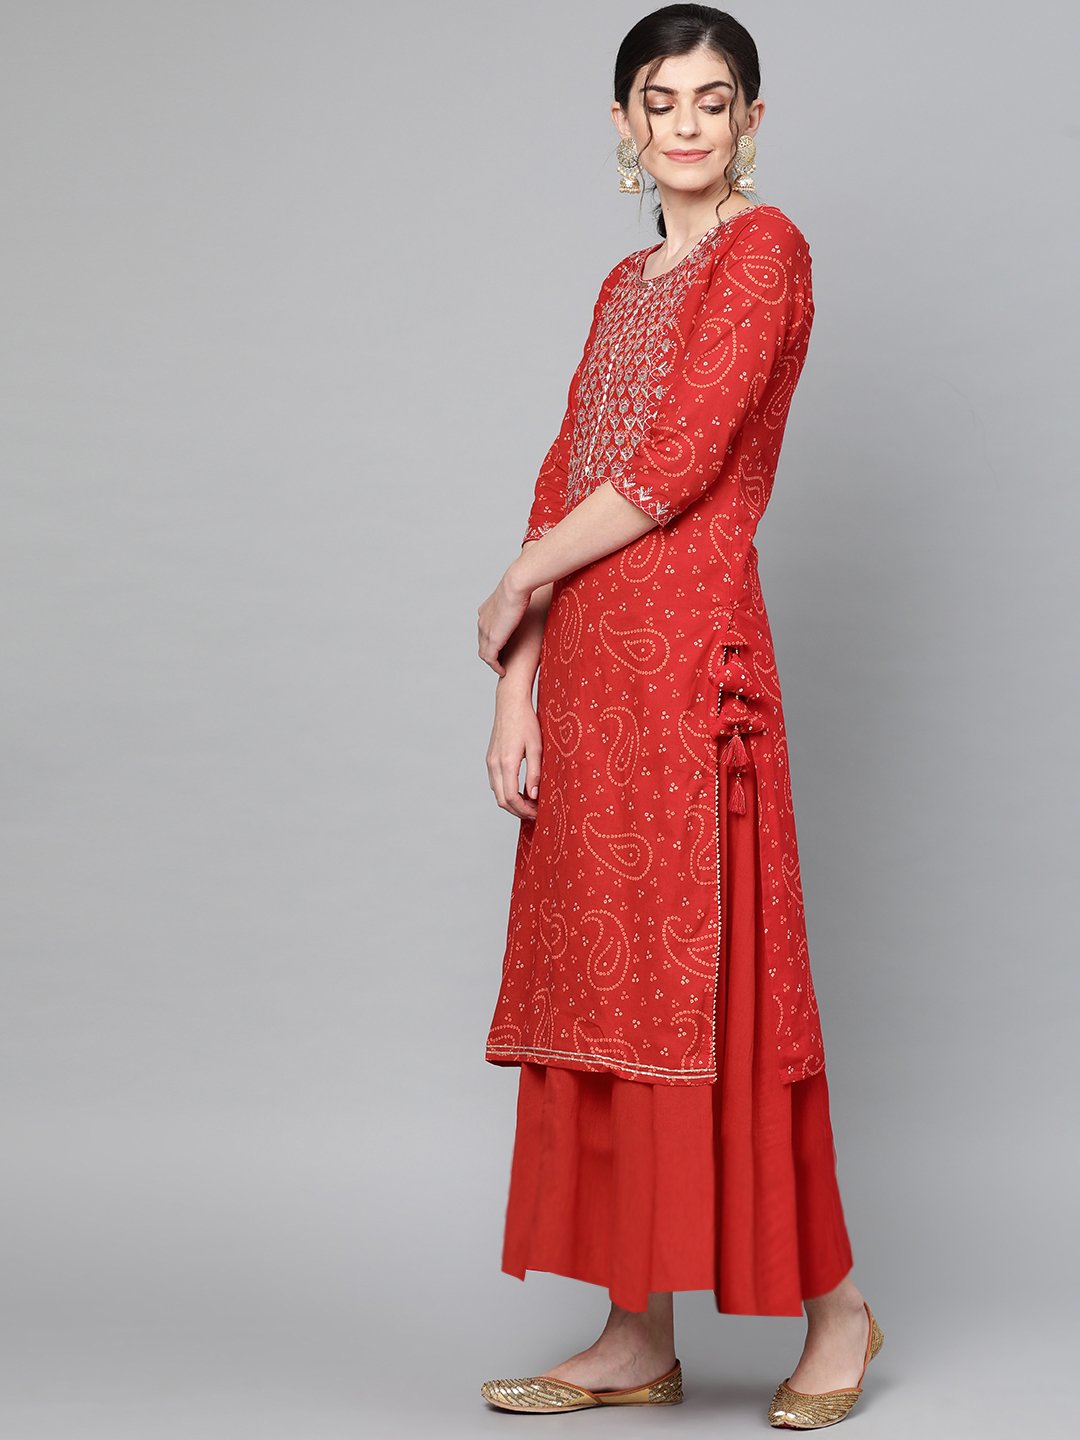 Ishin Women's Cotton Red Embroidered A-Line Kurta